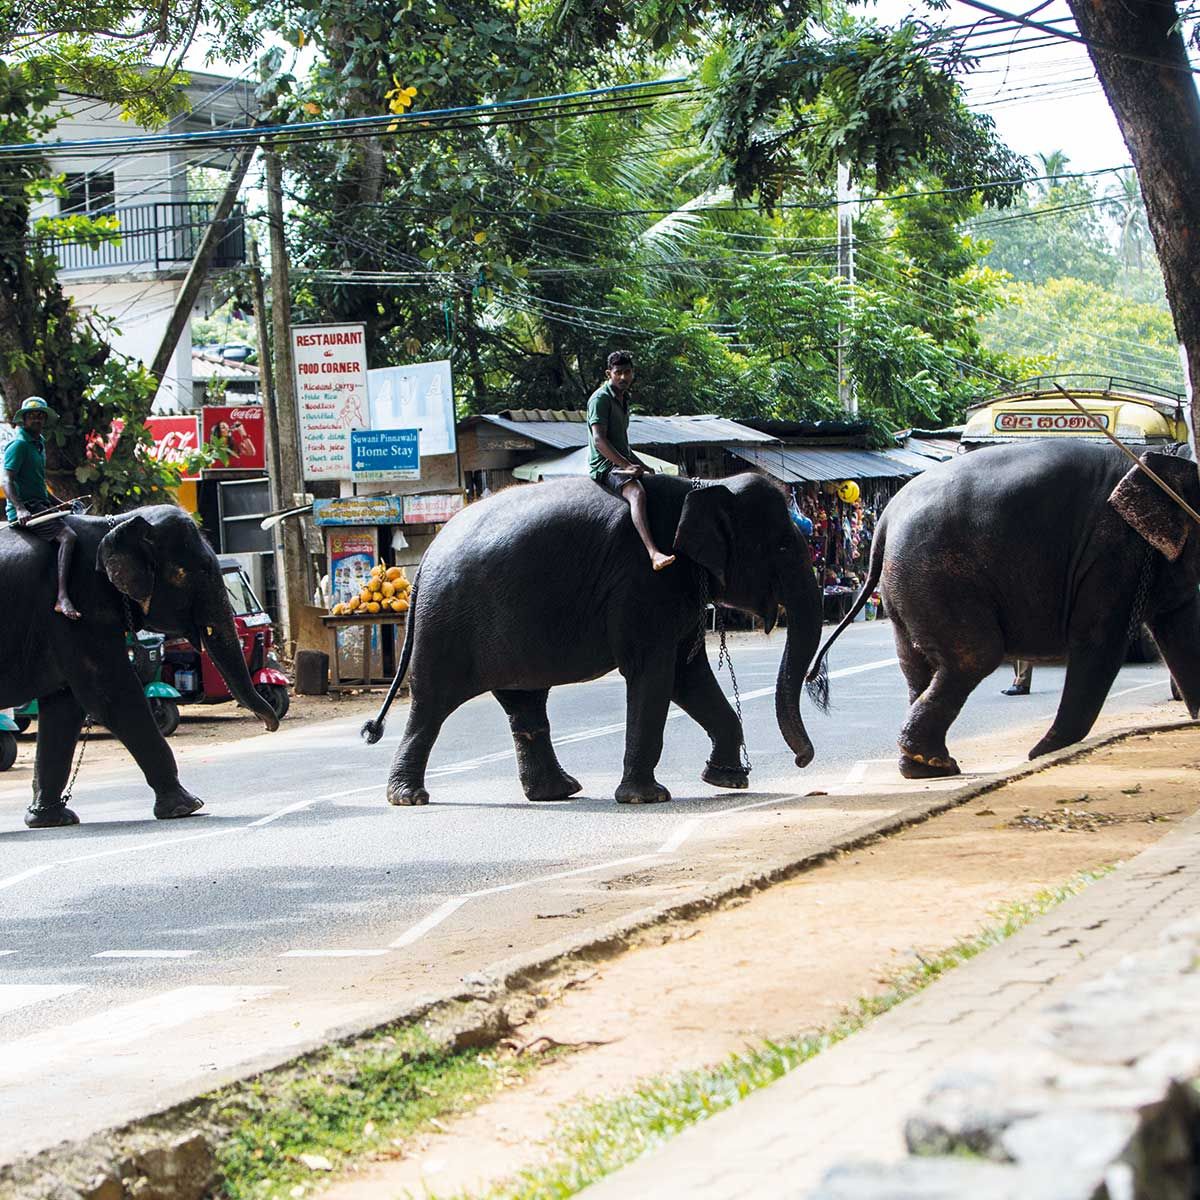 Image: elephants crossing street in India